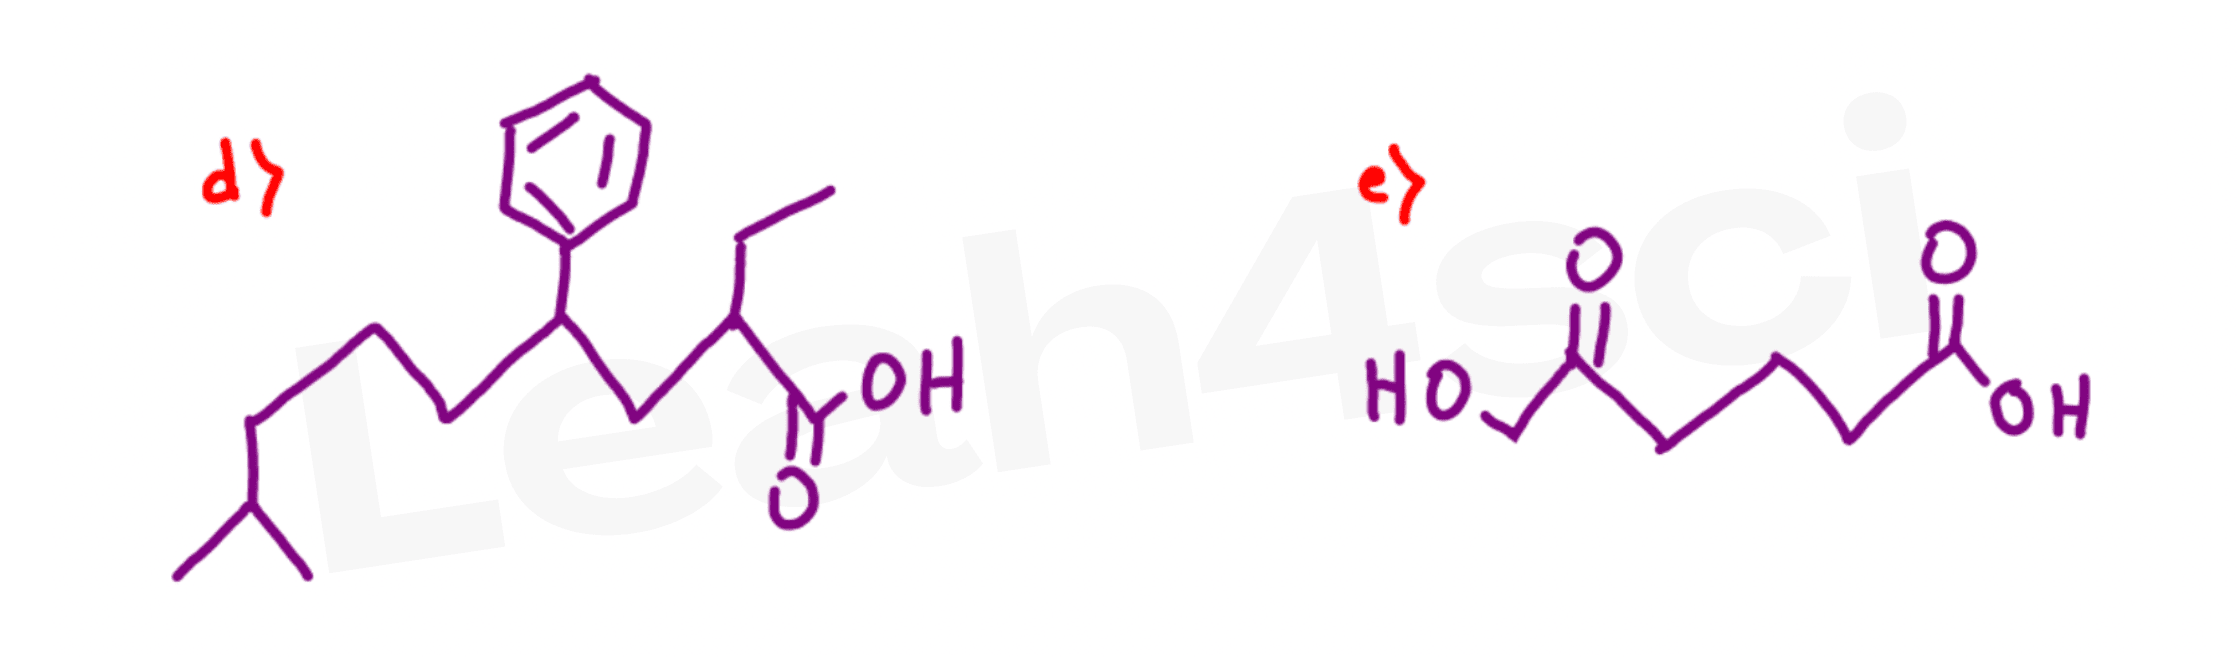 carboxylic acid naming practice